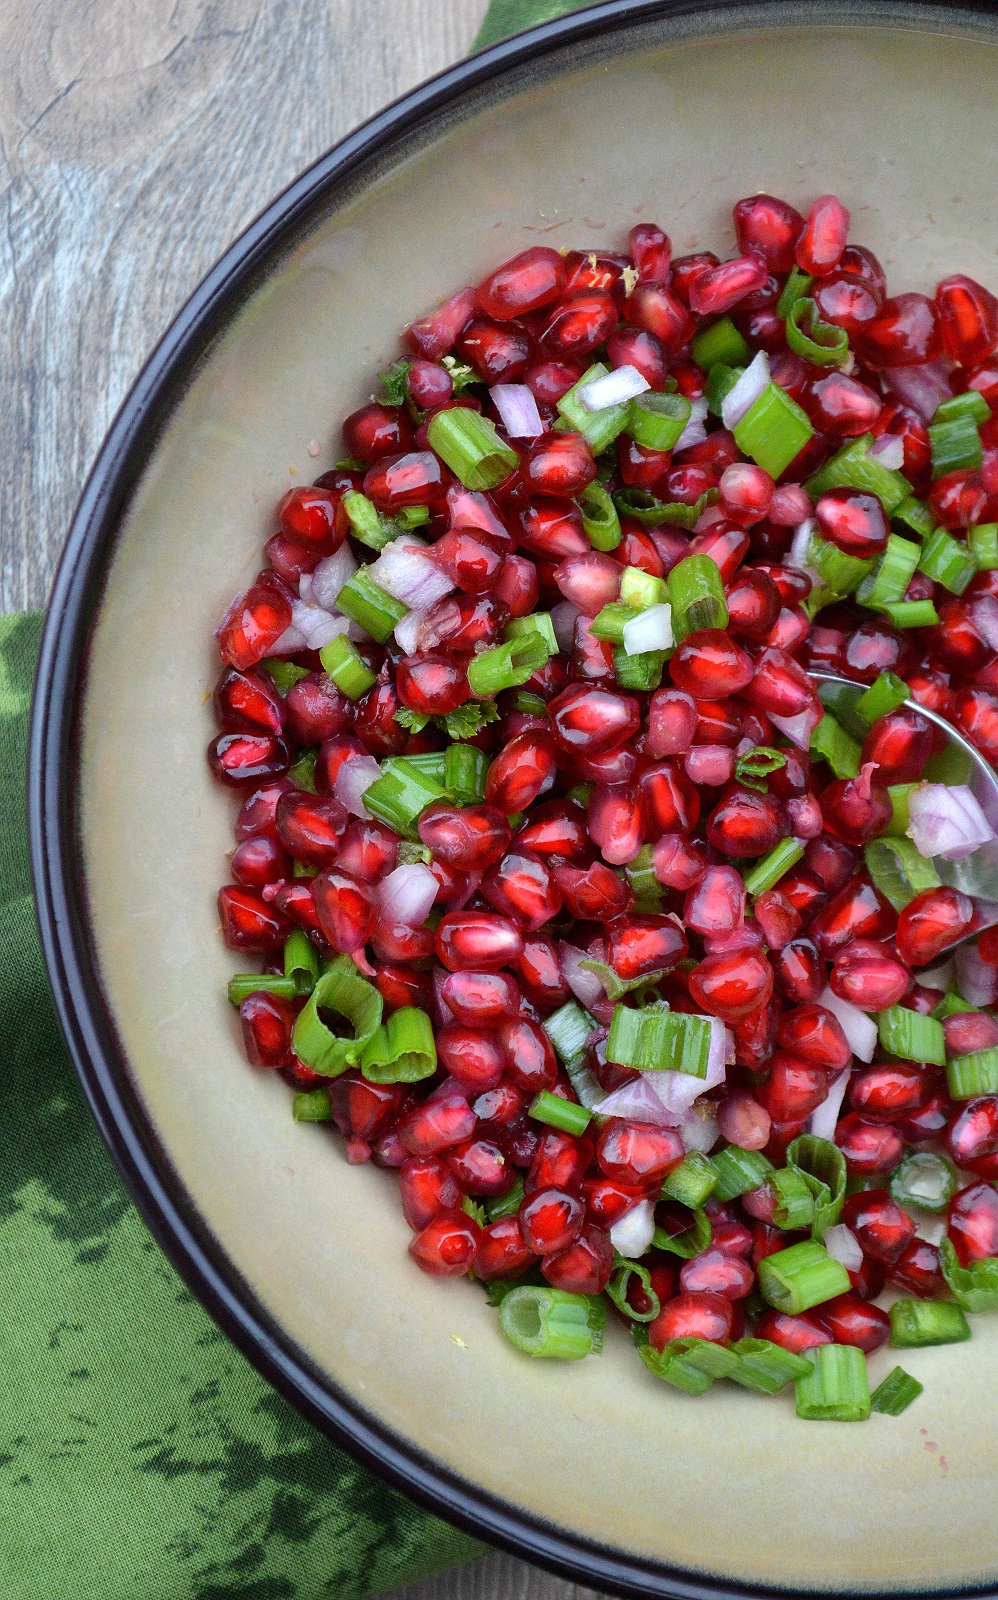 Pomegranate Salsa makes for a festive, pretty and delicious appetizer